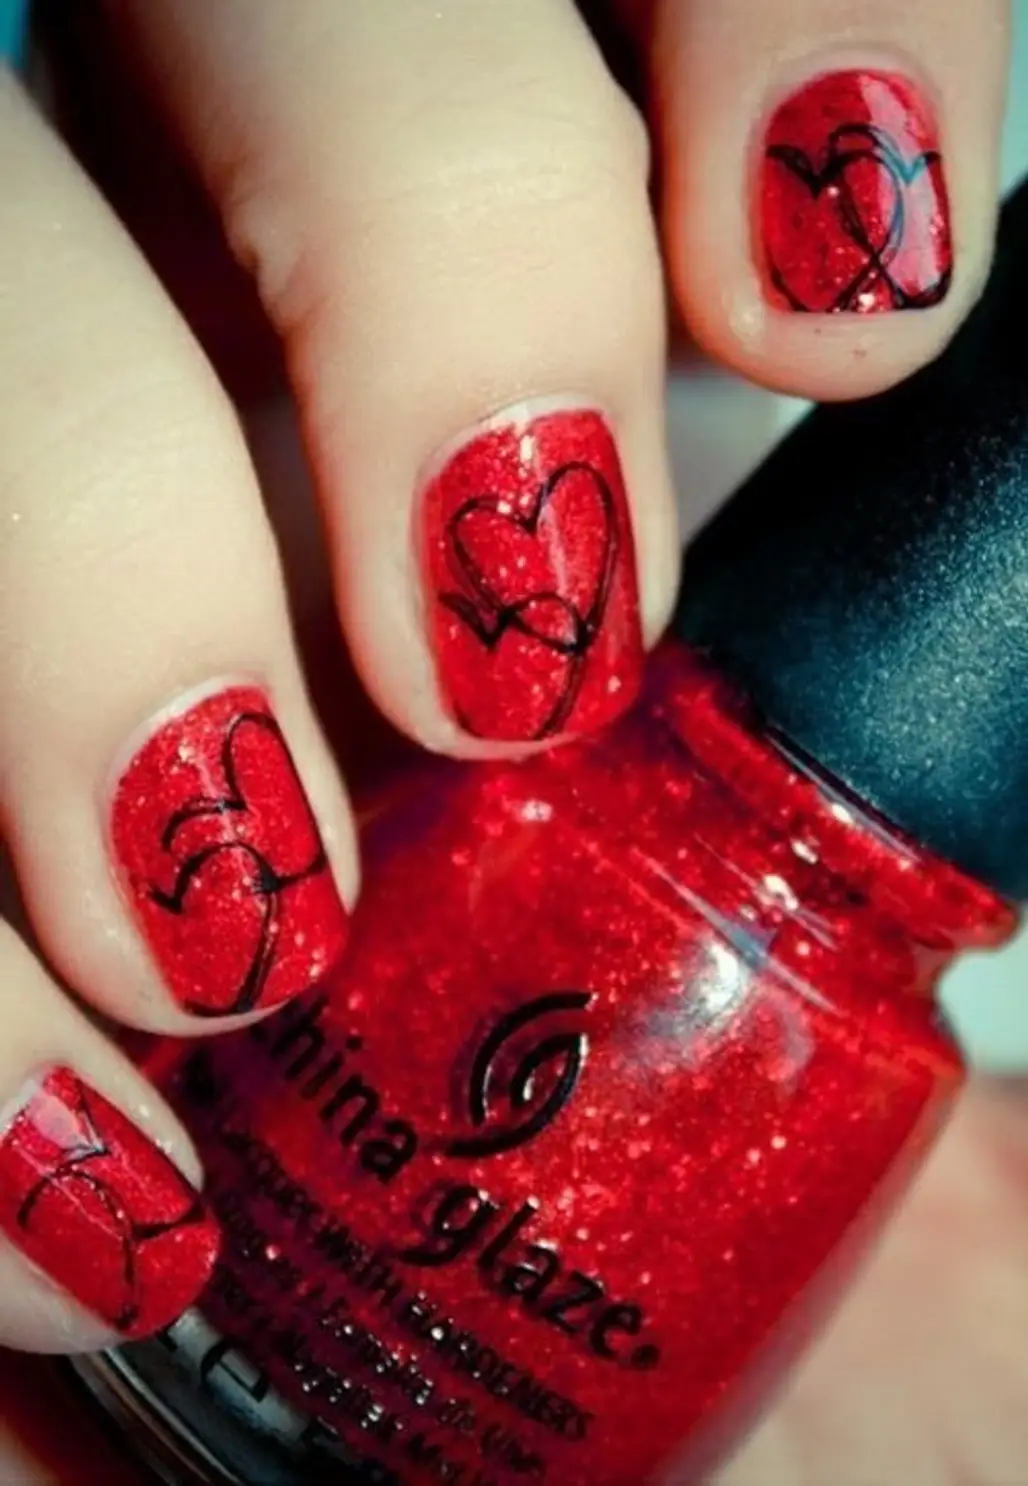 red,nail,finger,nail care,hand,